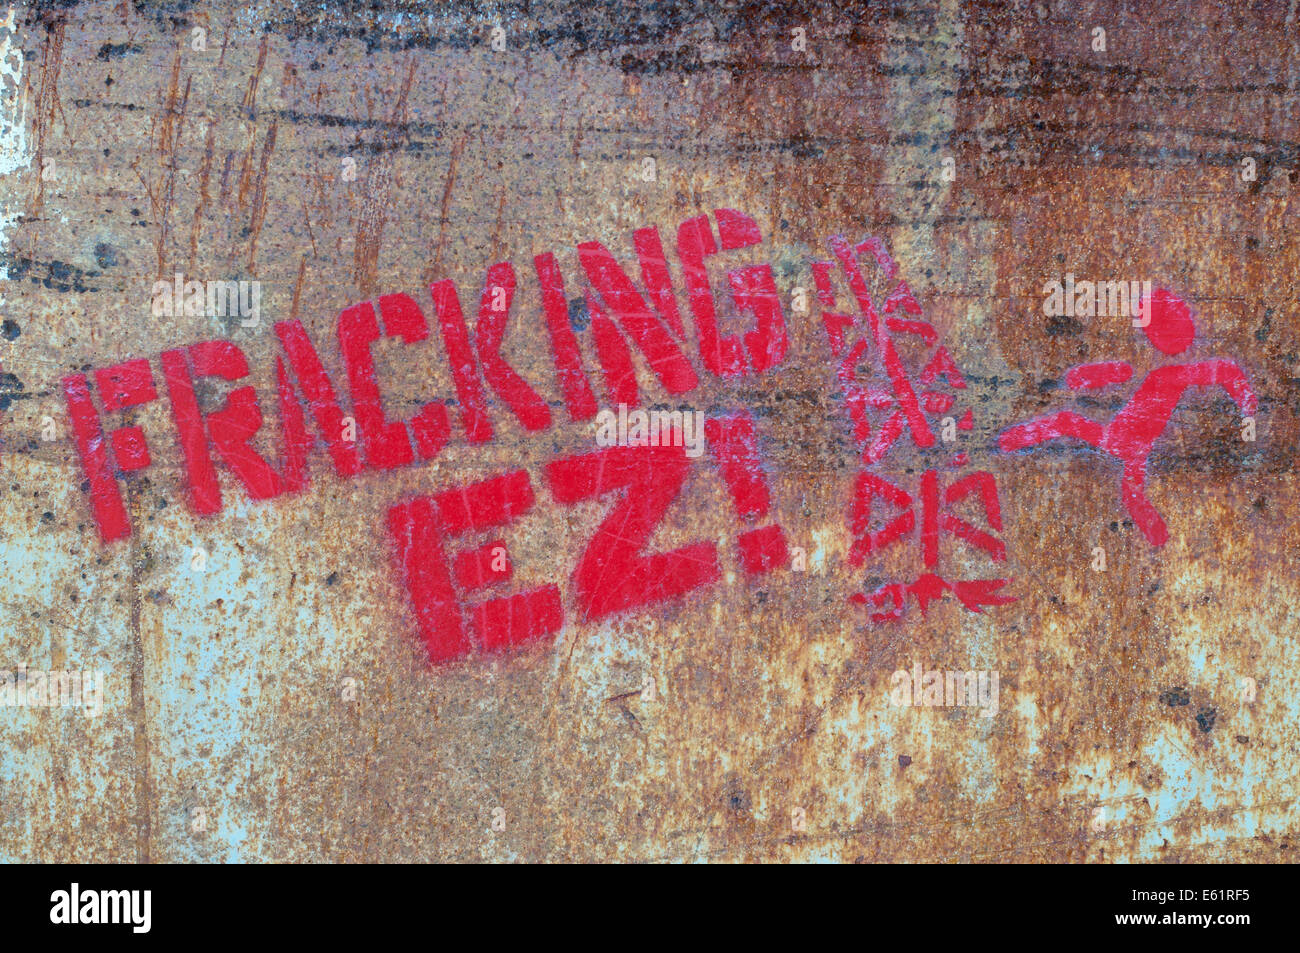 Graffiti protesting against Fracking EZ Zarautz , Gipuzkoa, northern Spain, Europe Stock Photo